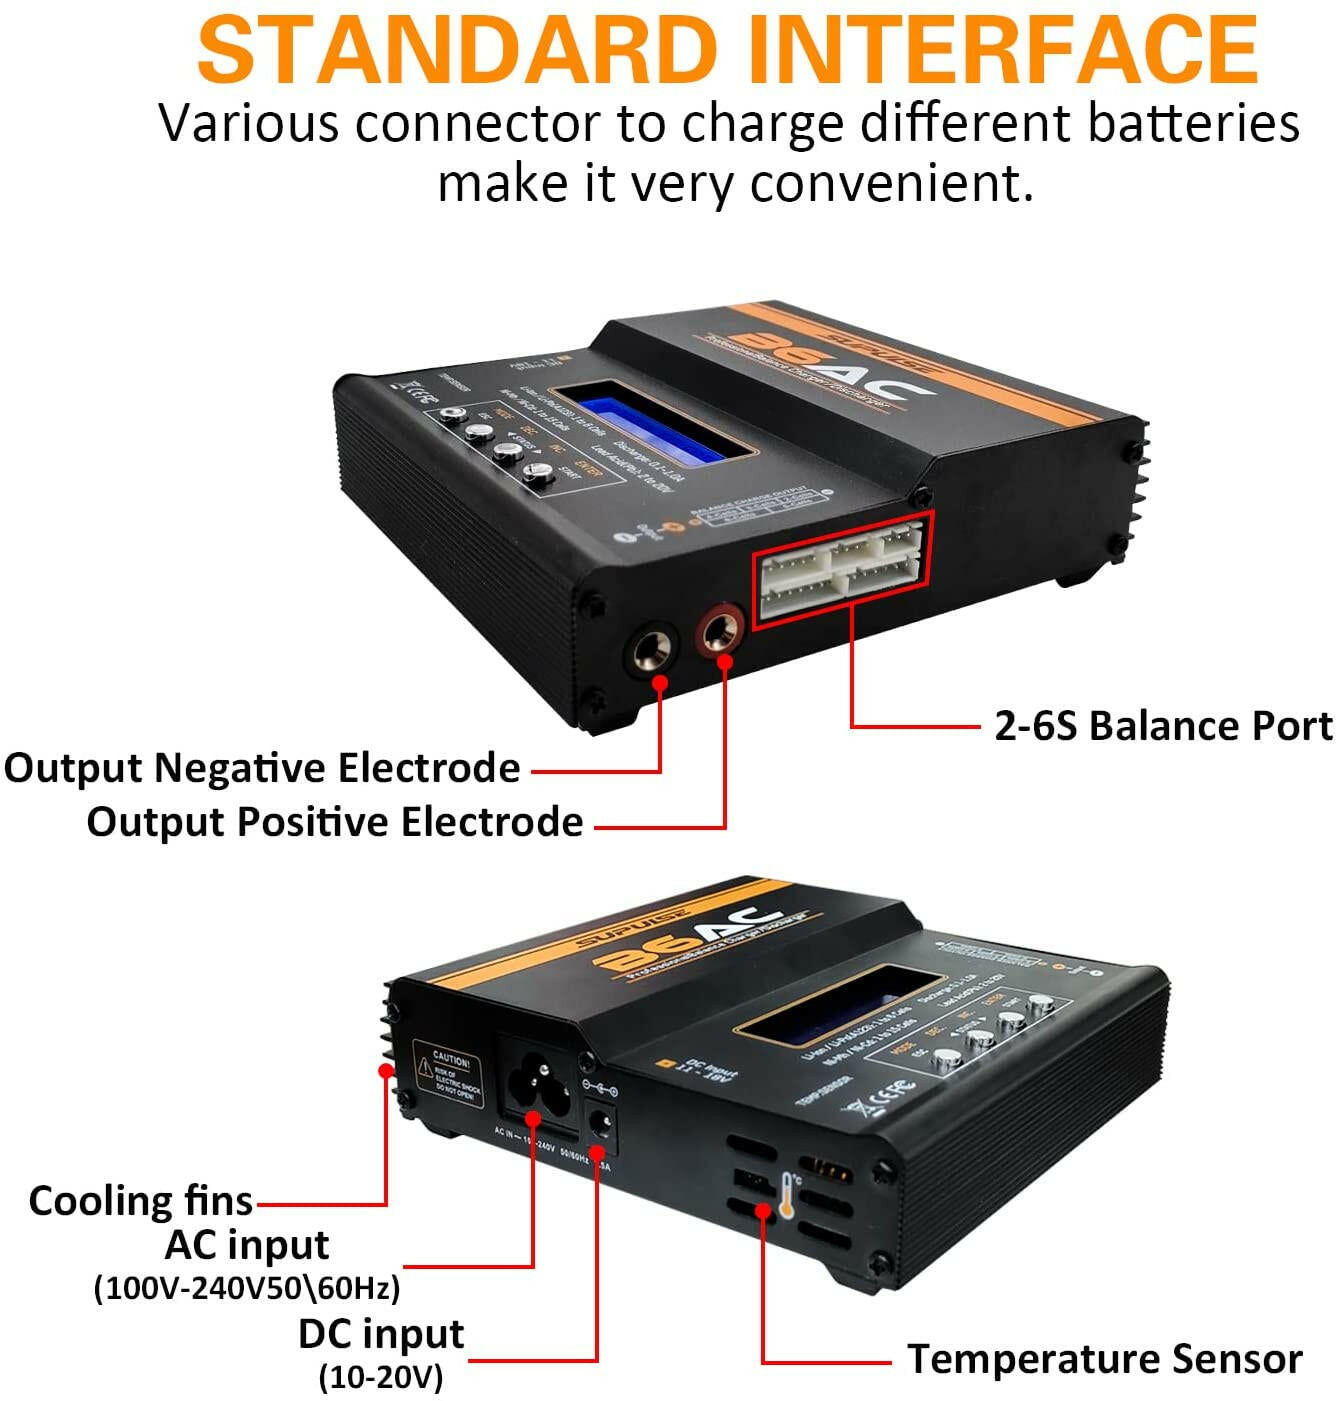 SUPULSE iMAX B6AC 1-6S AC/DC Lipo RC Battery Balance Charger Discharger - EXHOBBY